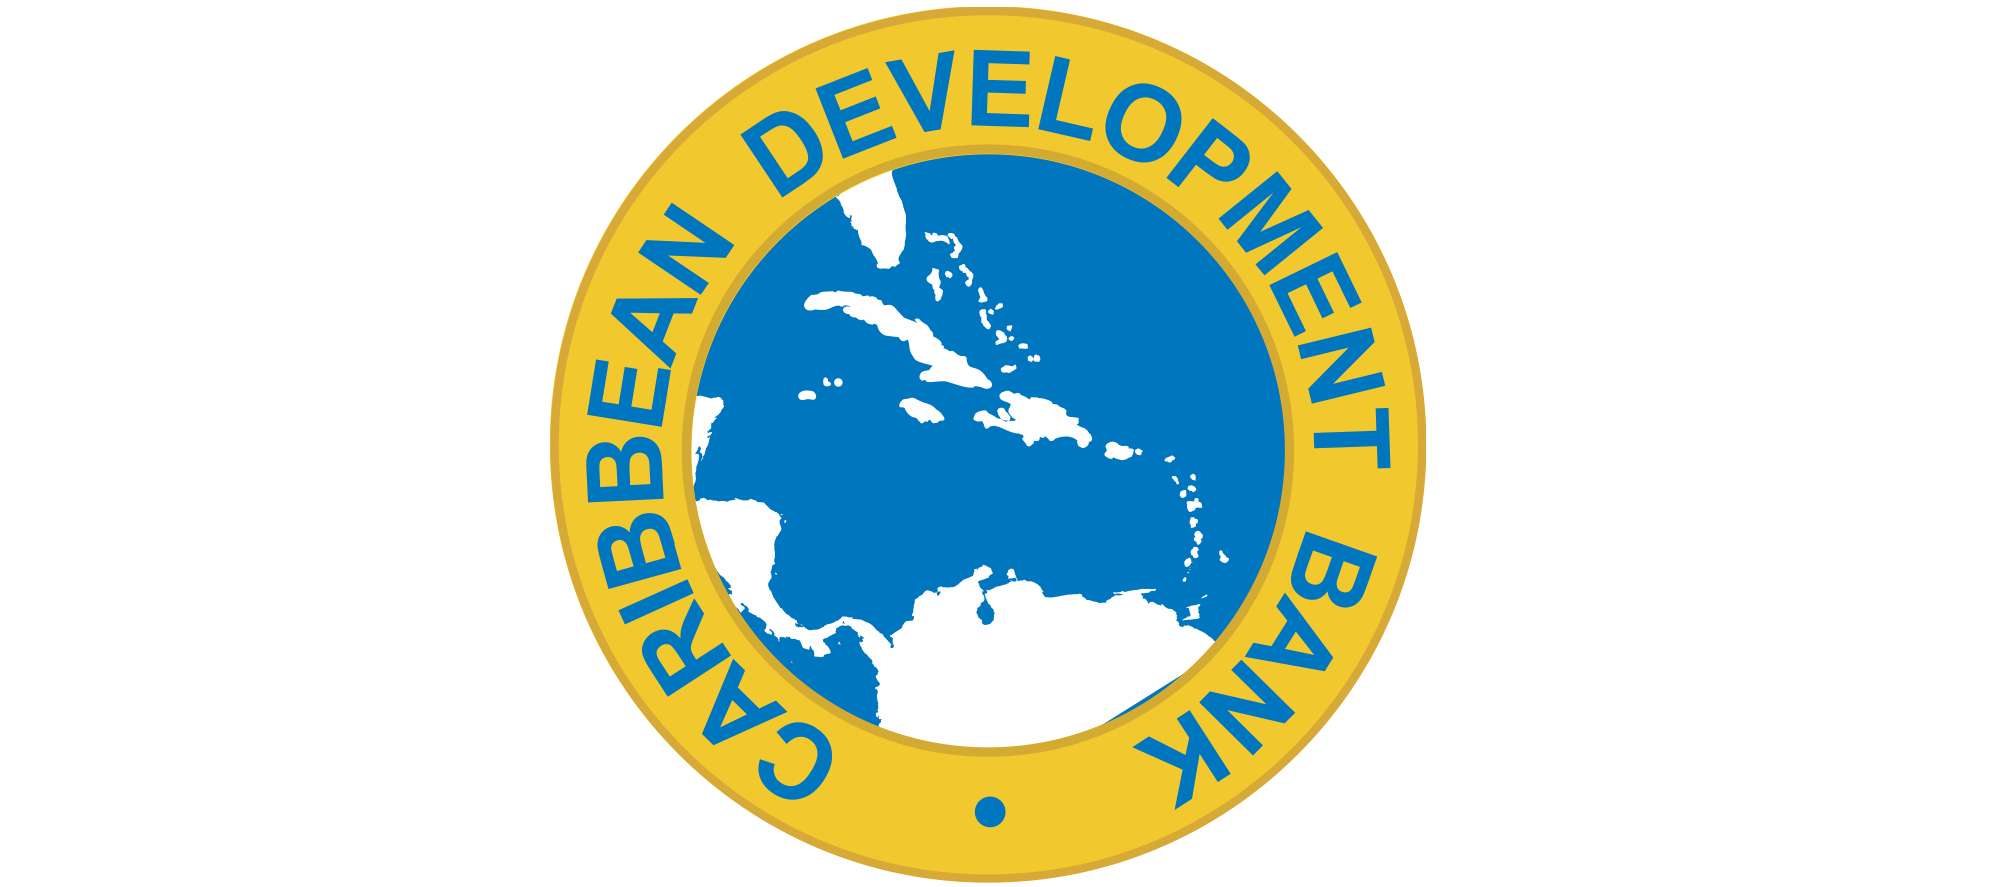 cdb logo